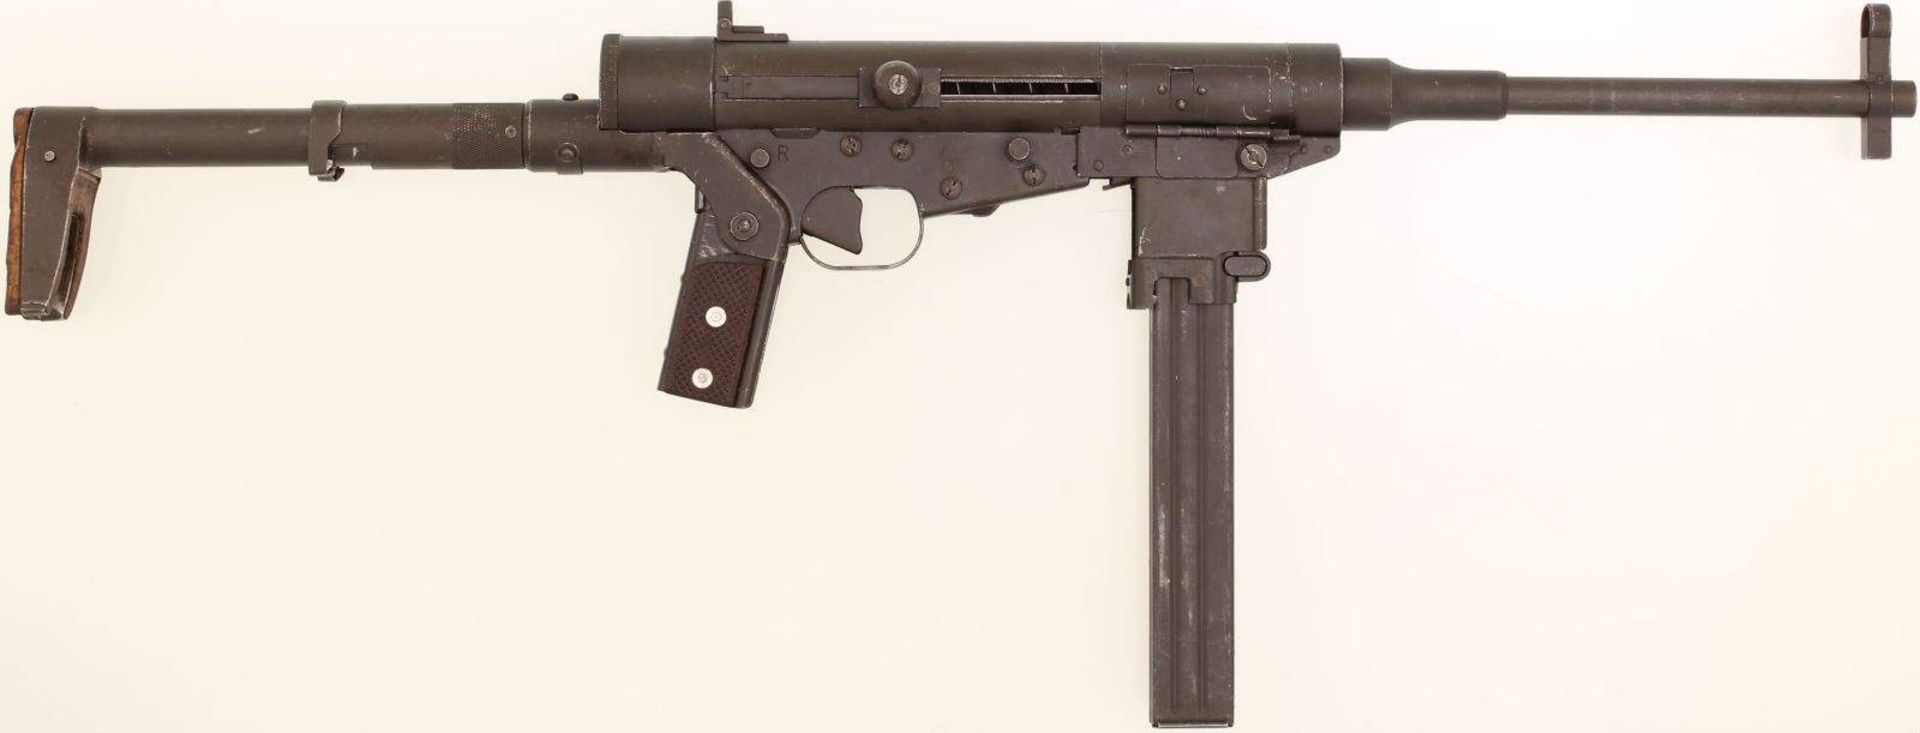 Maschinenpistole Hotchkiss Universal CMH.2, Kal. 9mmP. Kompakt zusammenklappbare Waffe mit